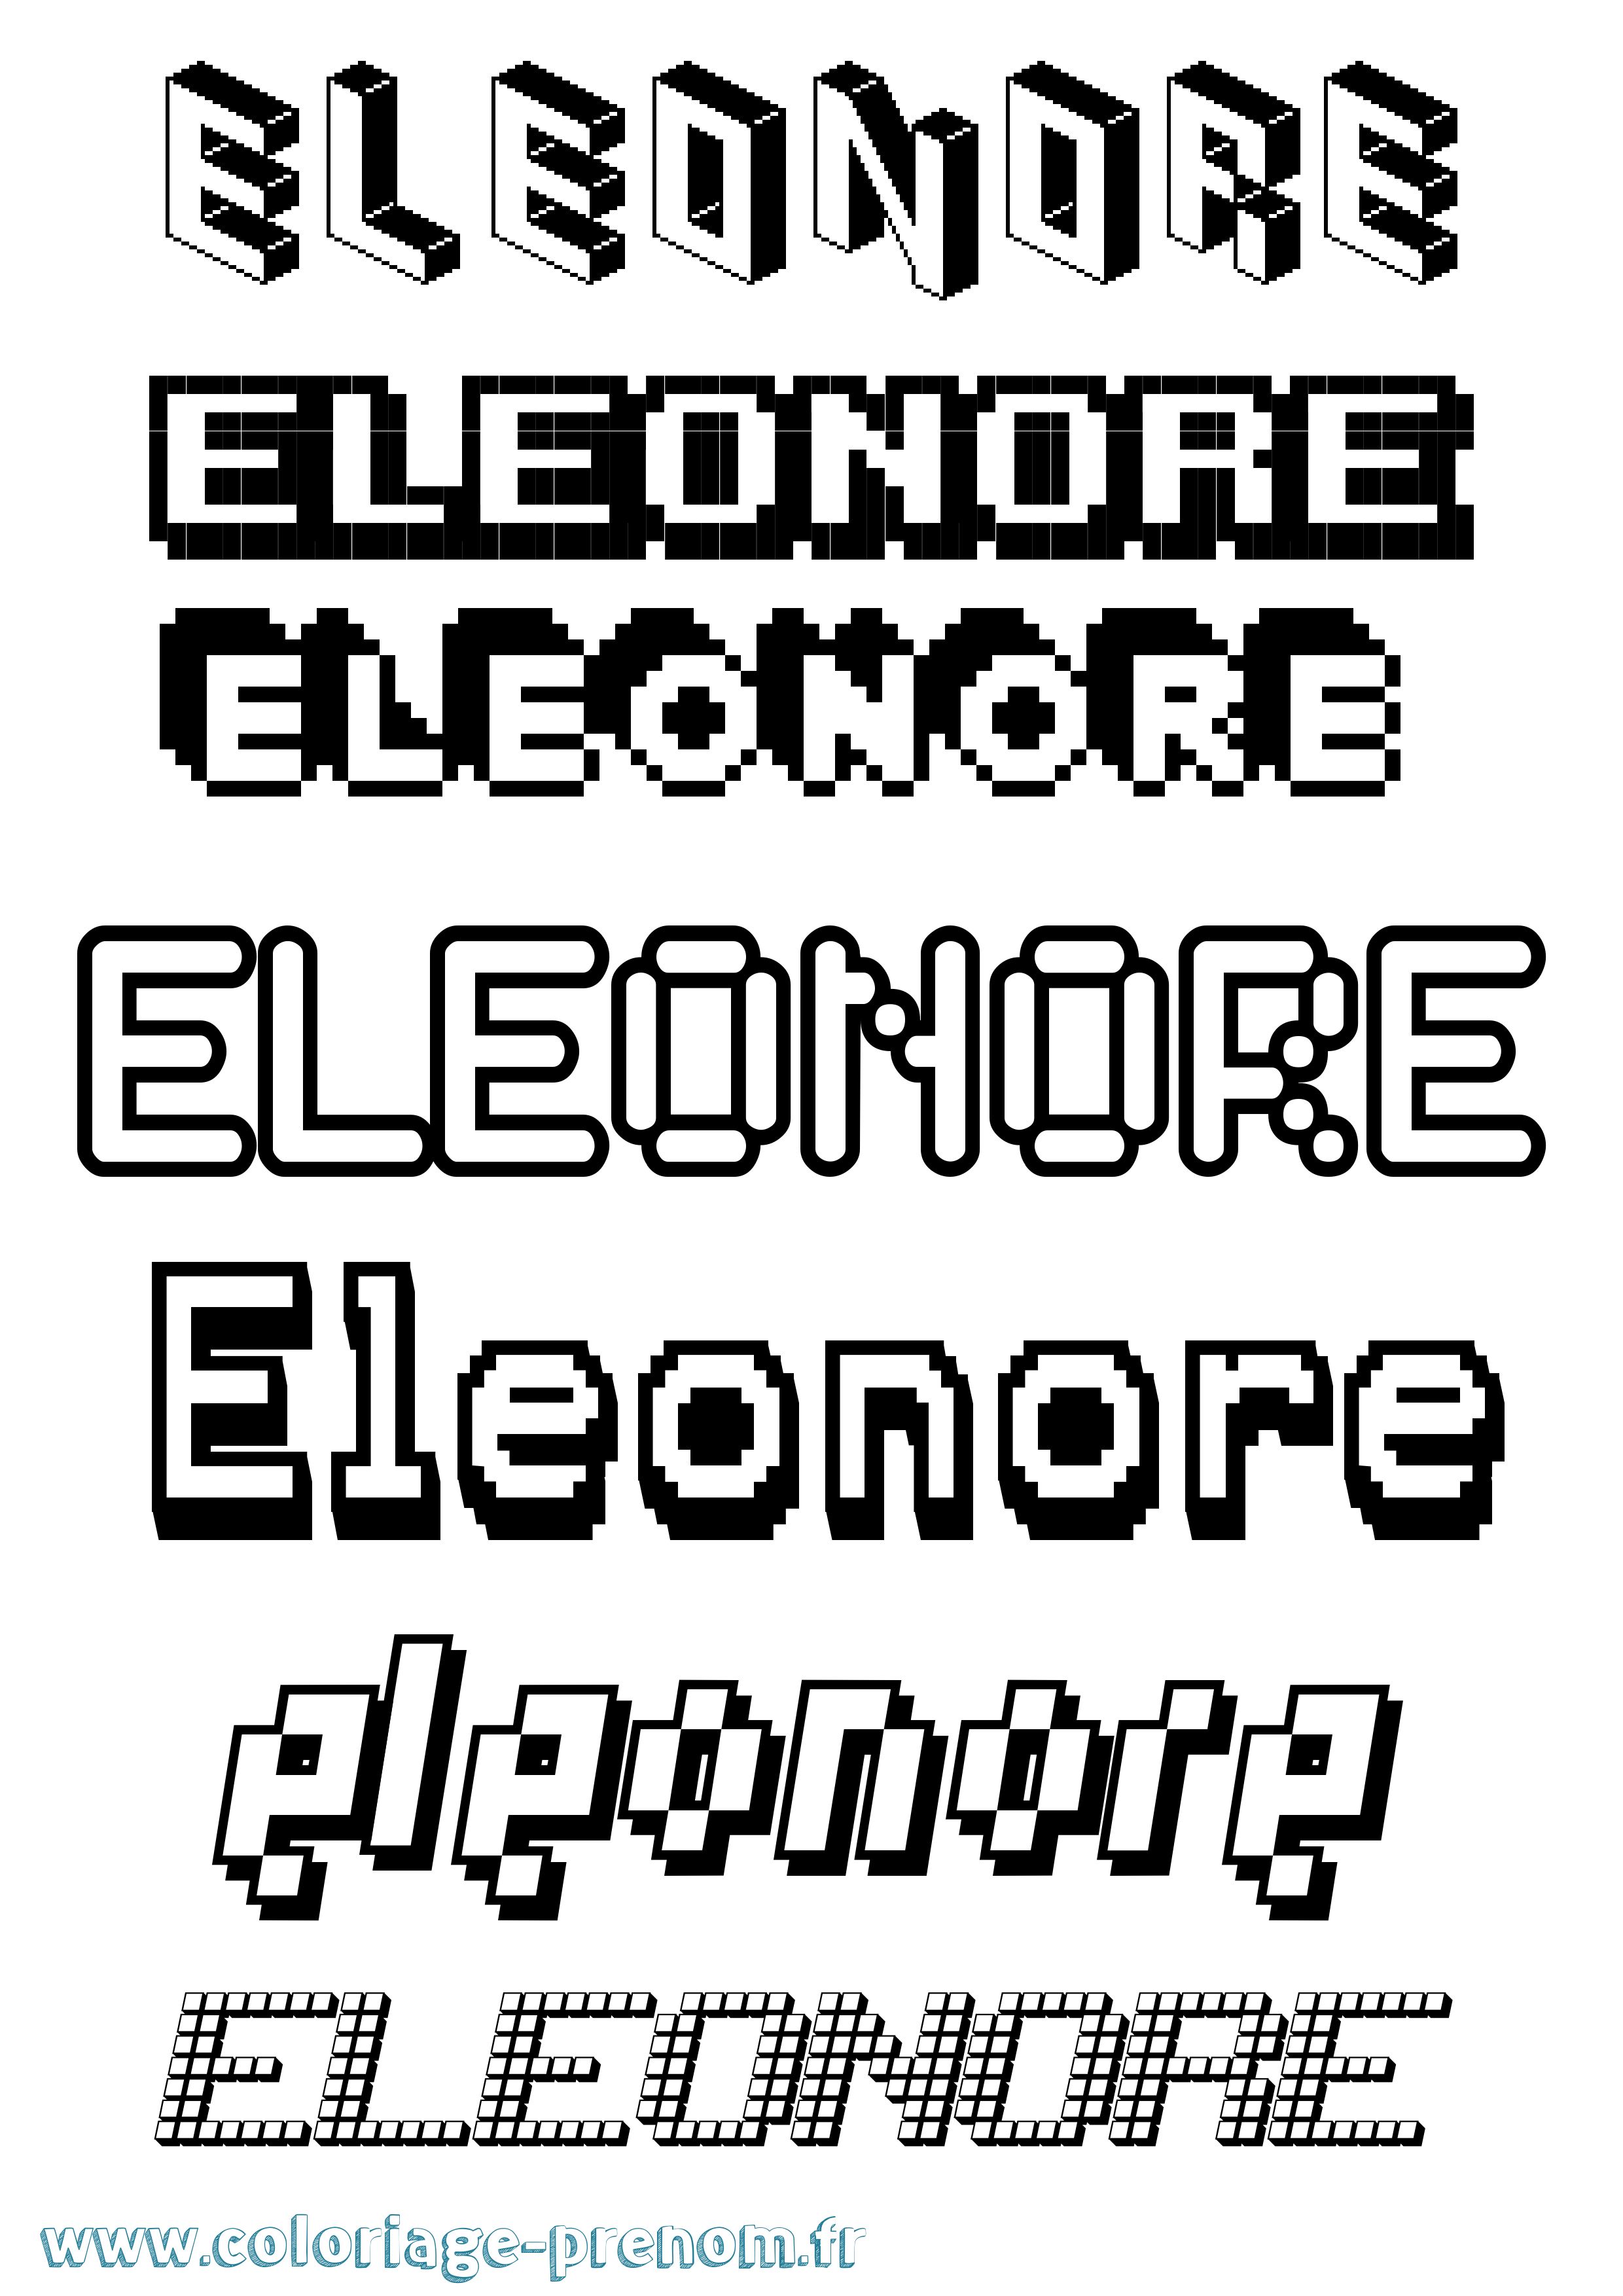 Coloriage prénom Eleonore Pixel